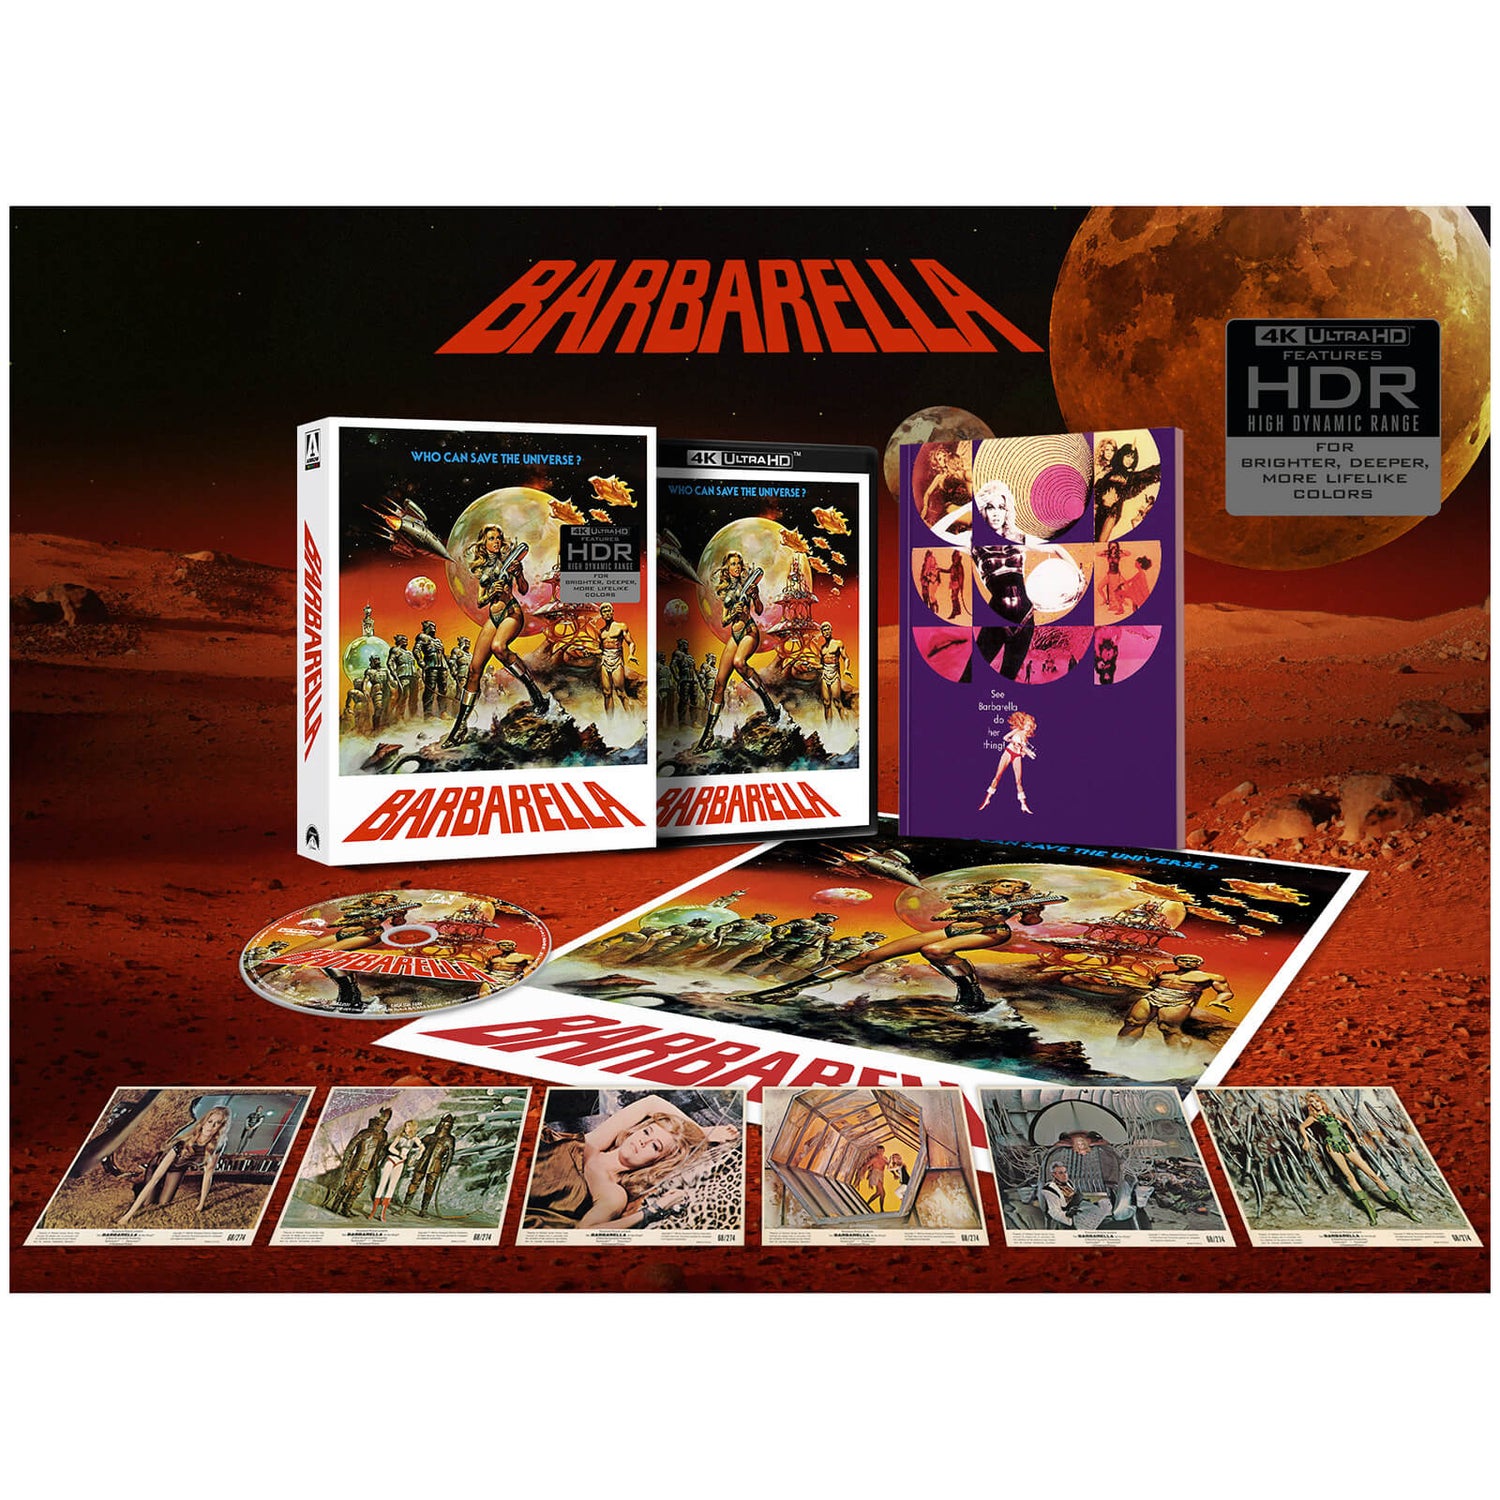 Barbarella | Original Artwork | Arrow Store Exclusive | Limited Edition 4K UHD